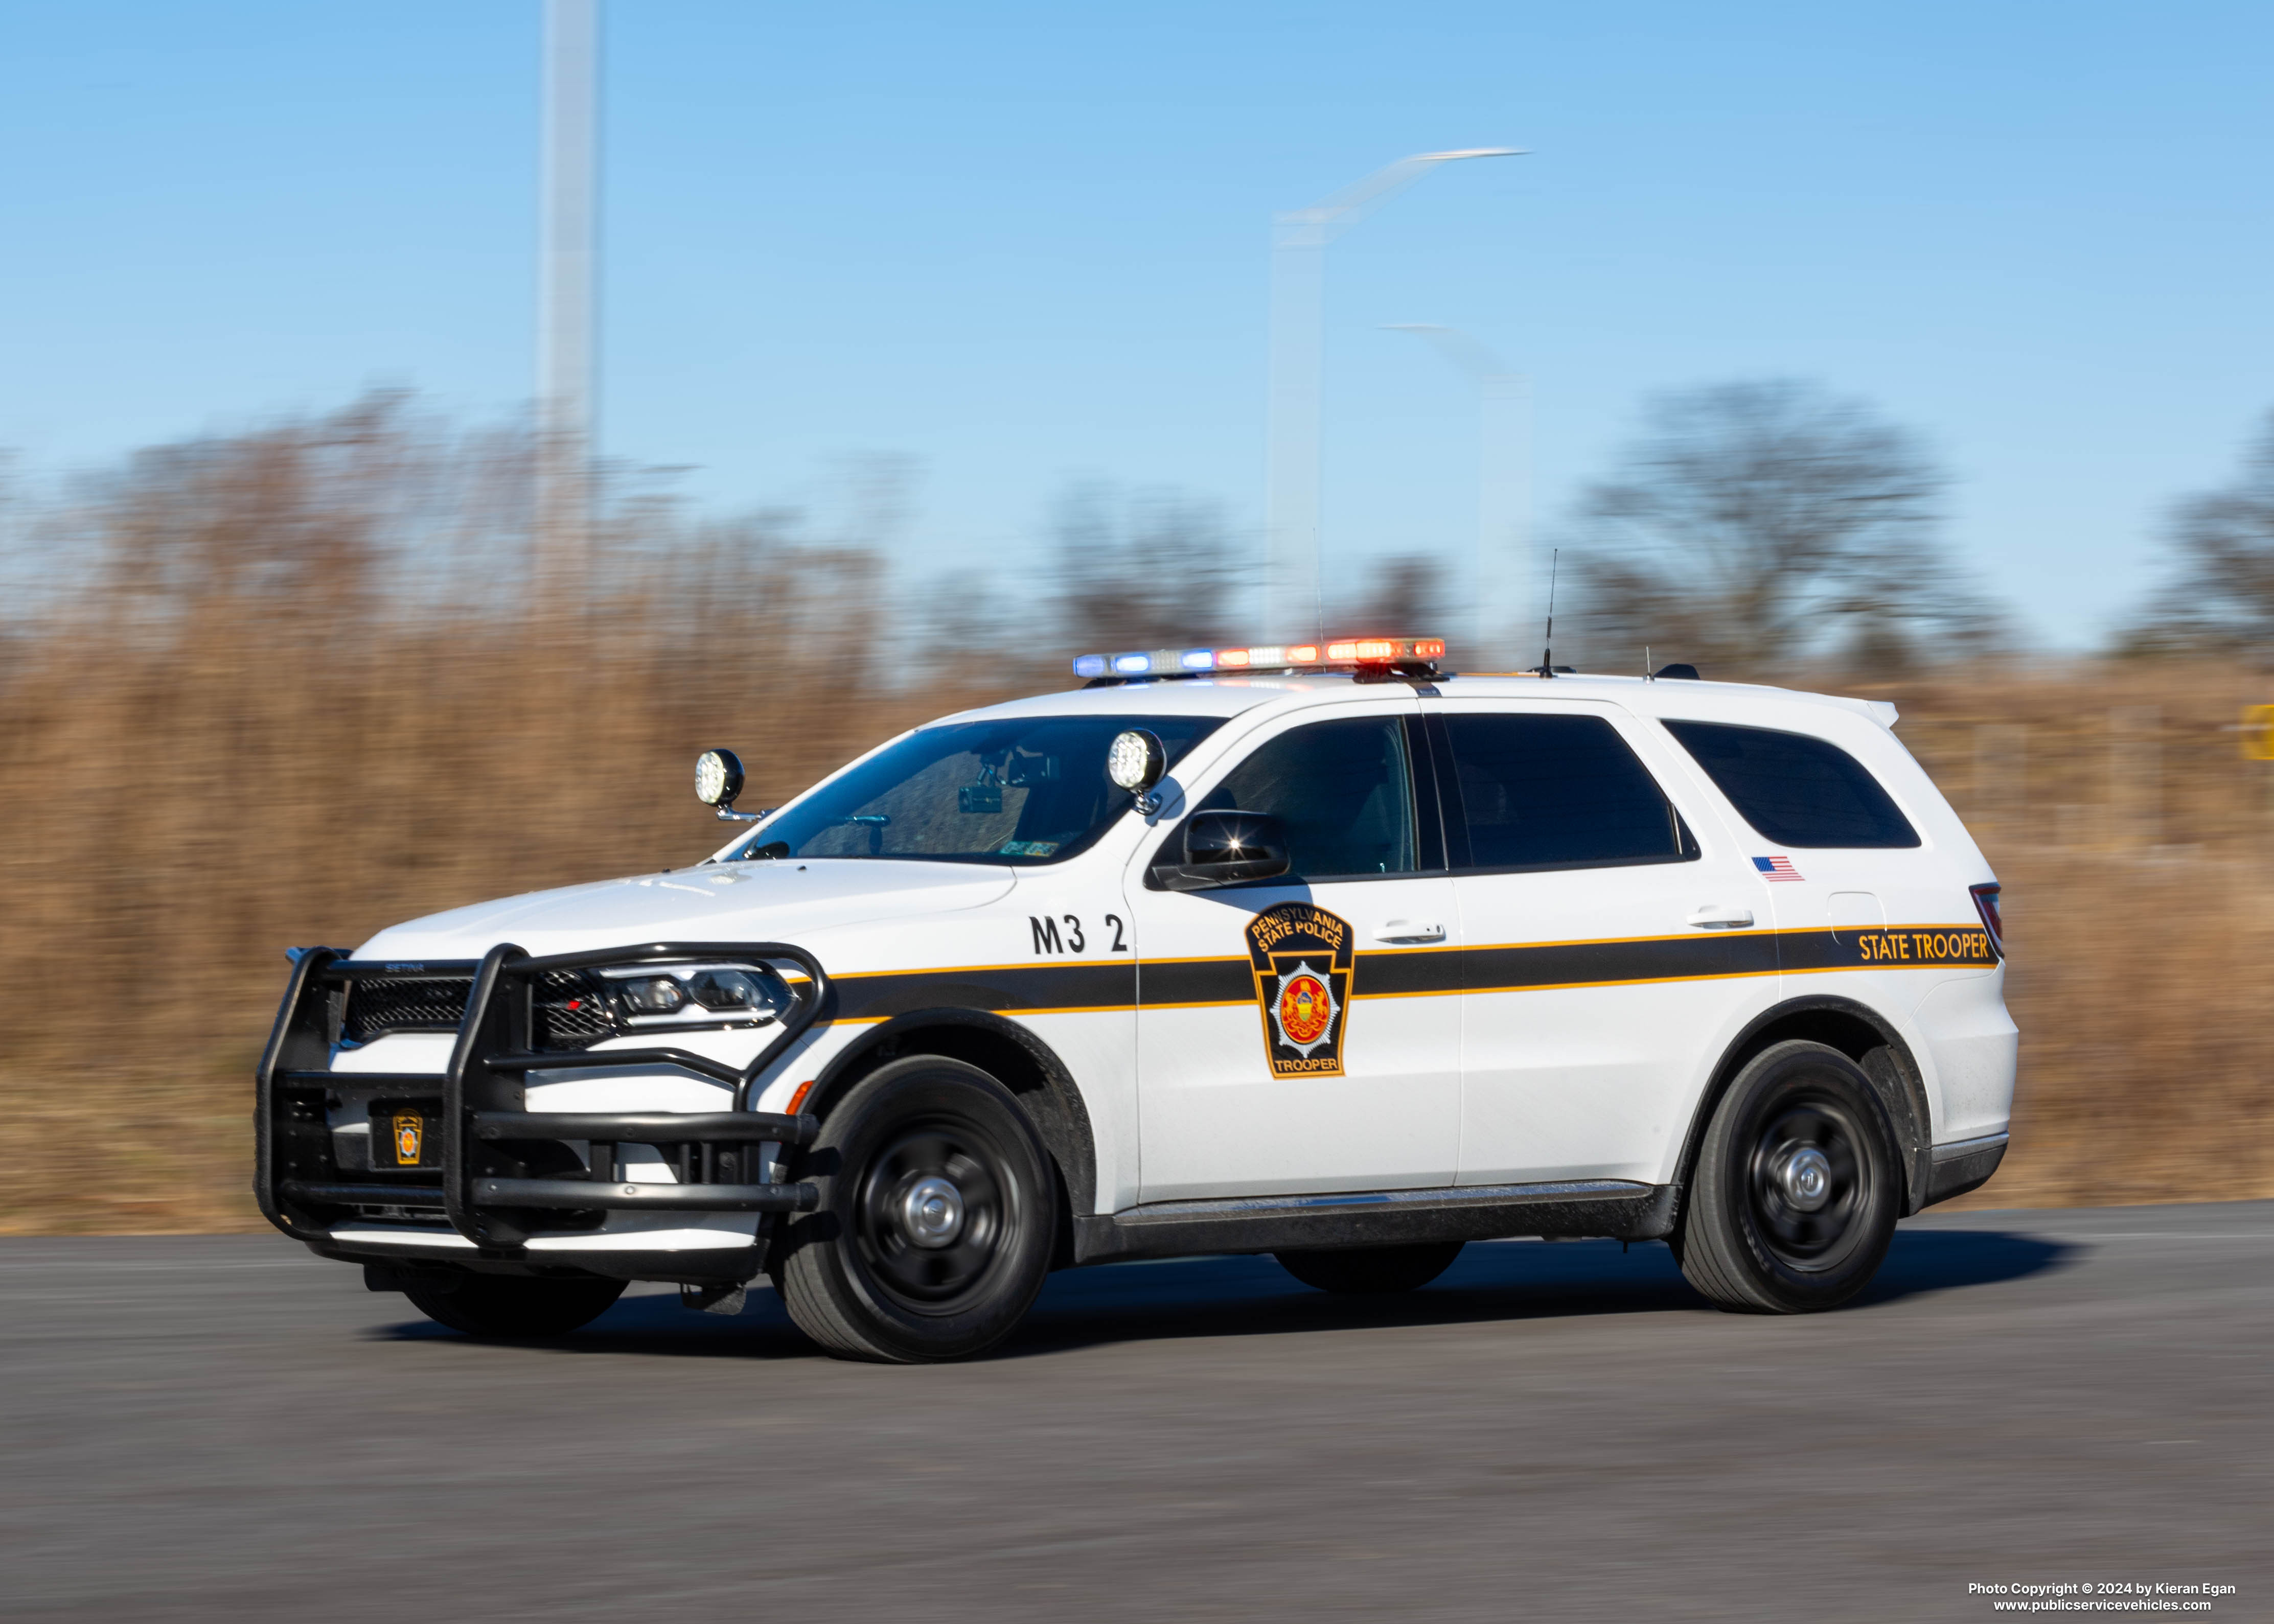 A photo  of Pennsylvania State Police
            Cruiser M3 2, a 2023 Dodge Durango Pursuit             taken by Kieran Egan